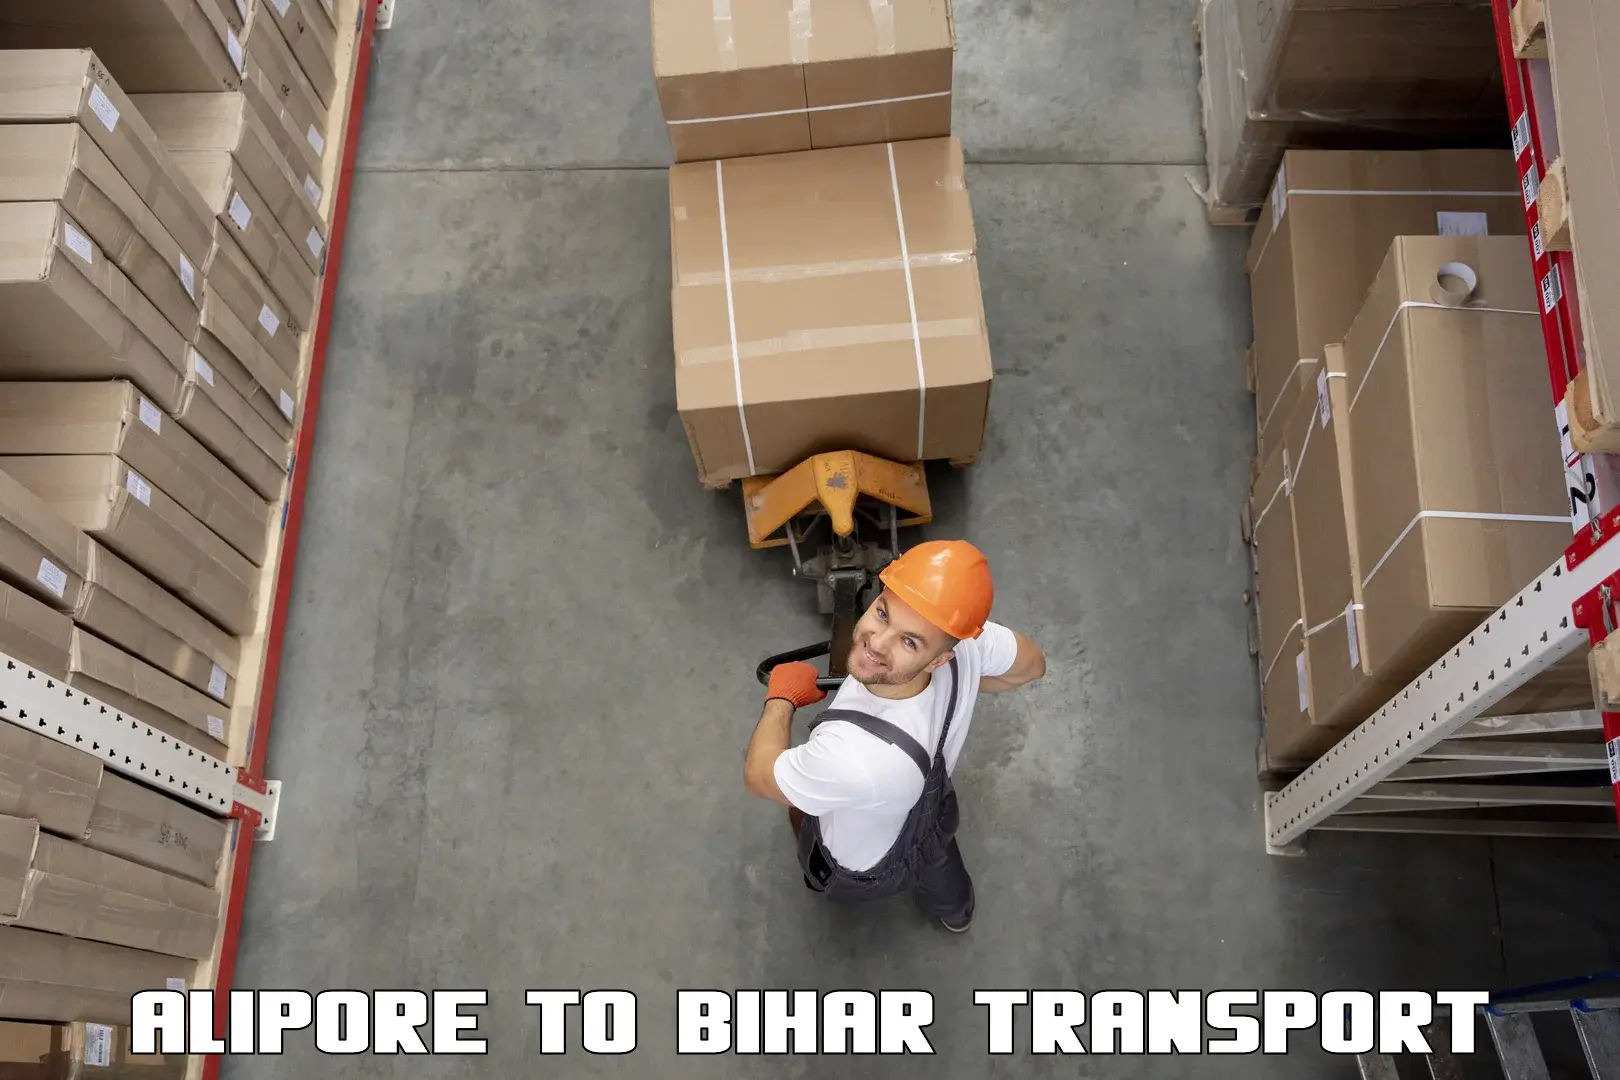 Furniture transport service Alipore to Bihar